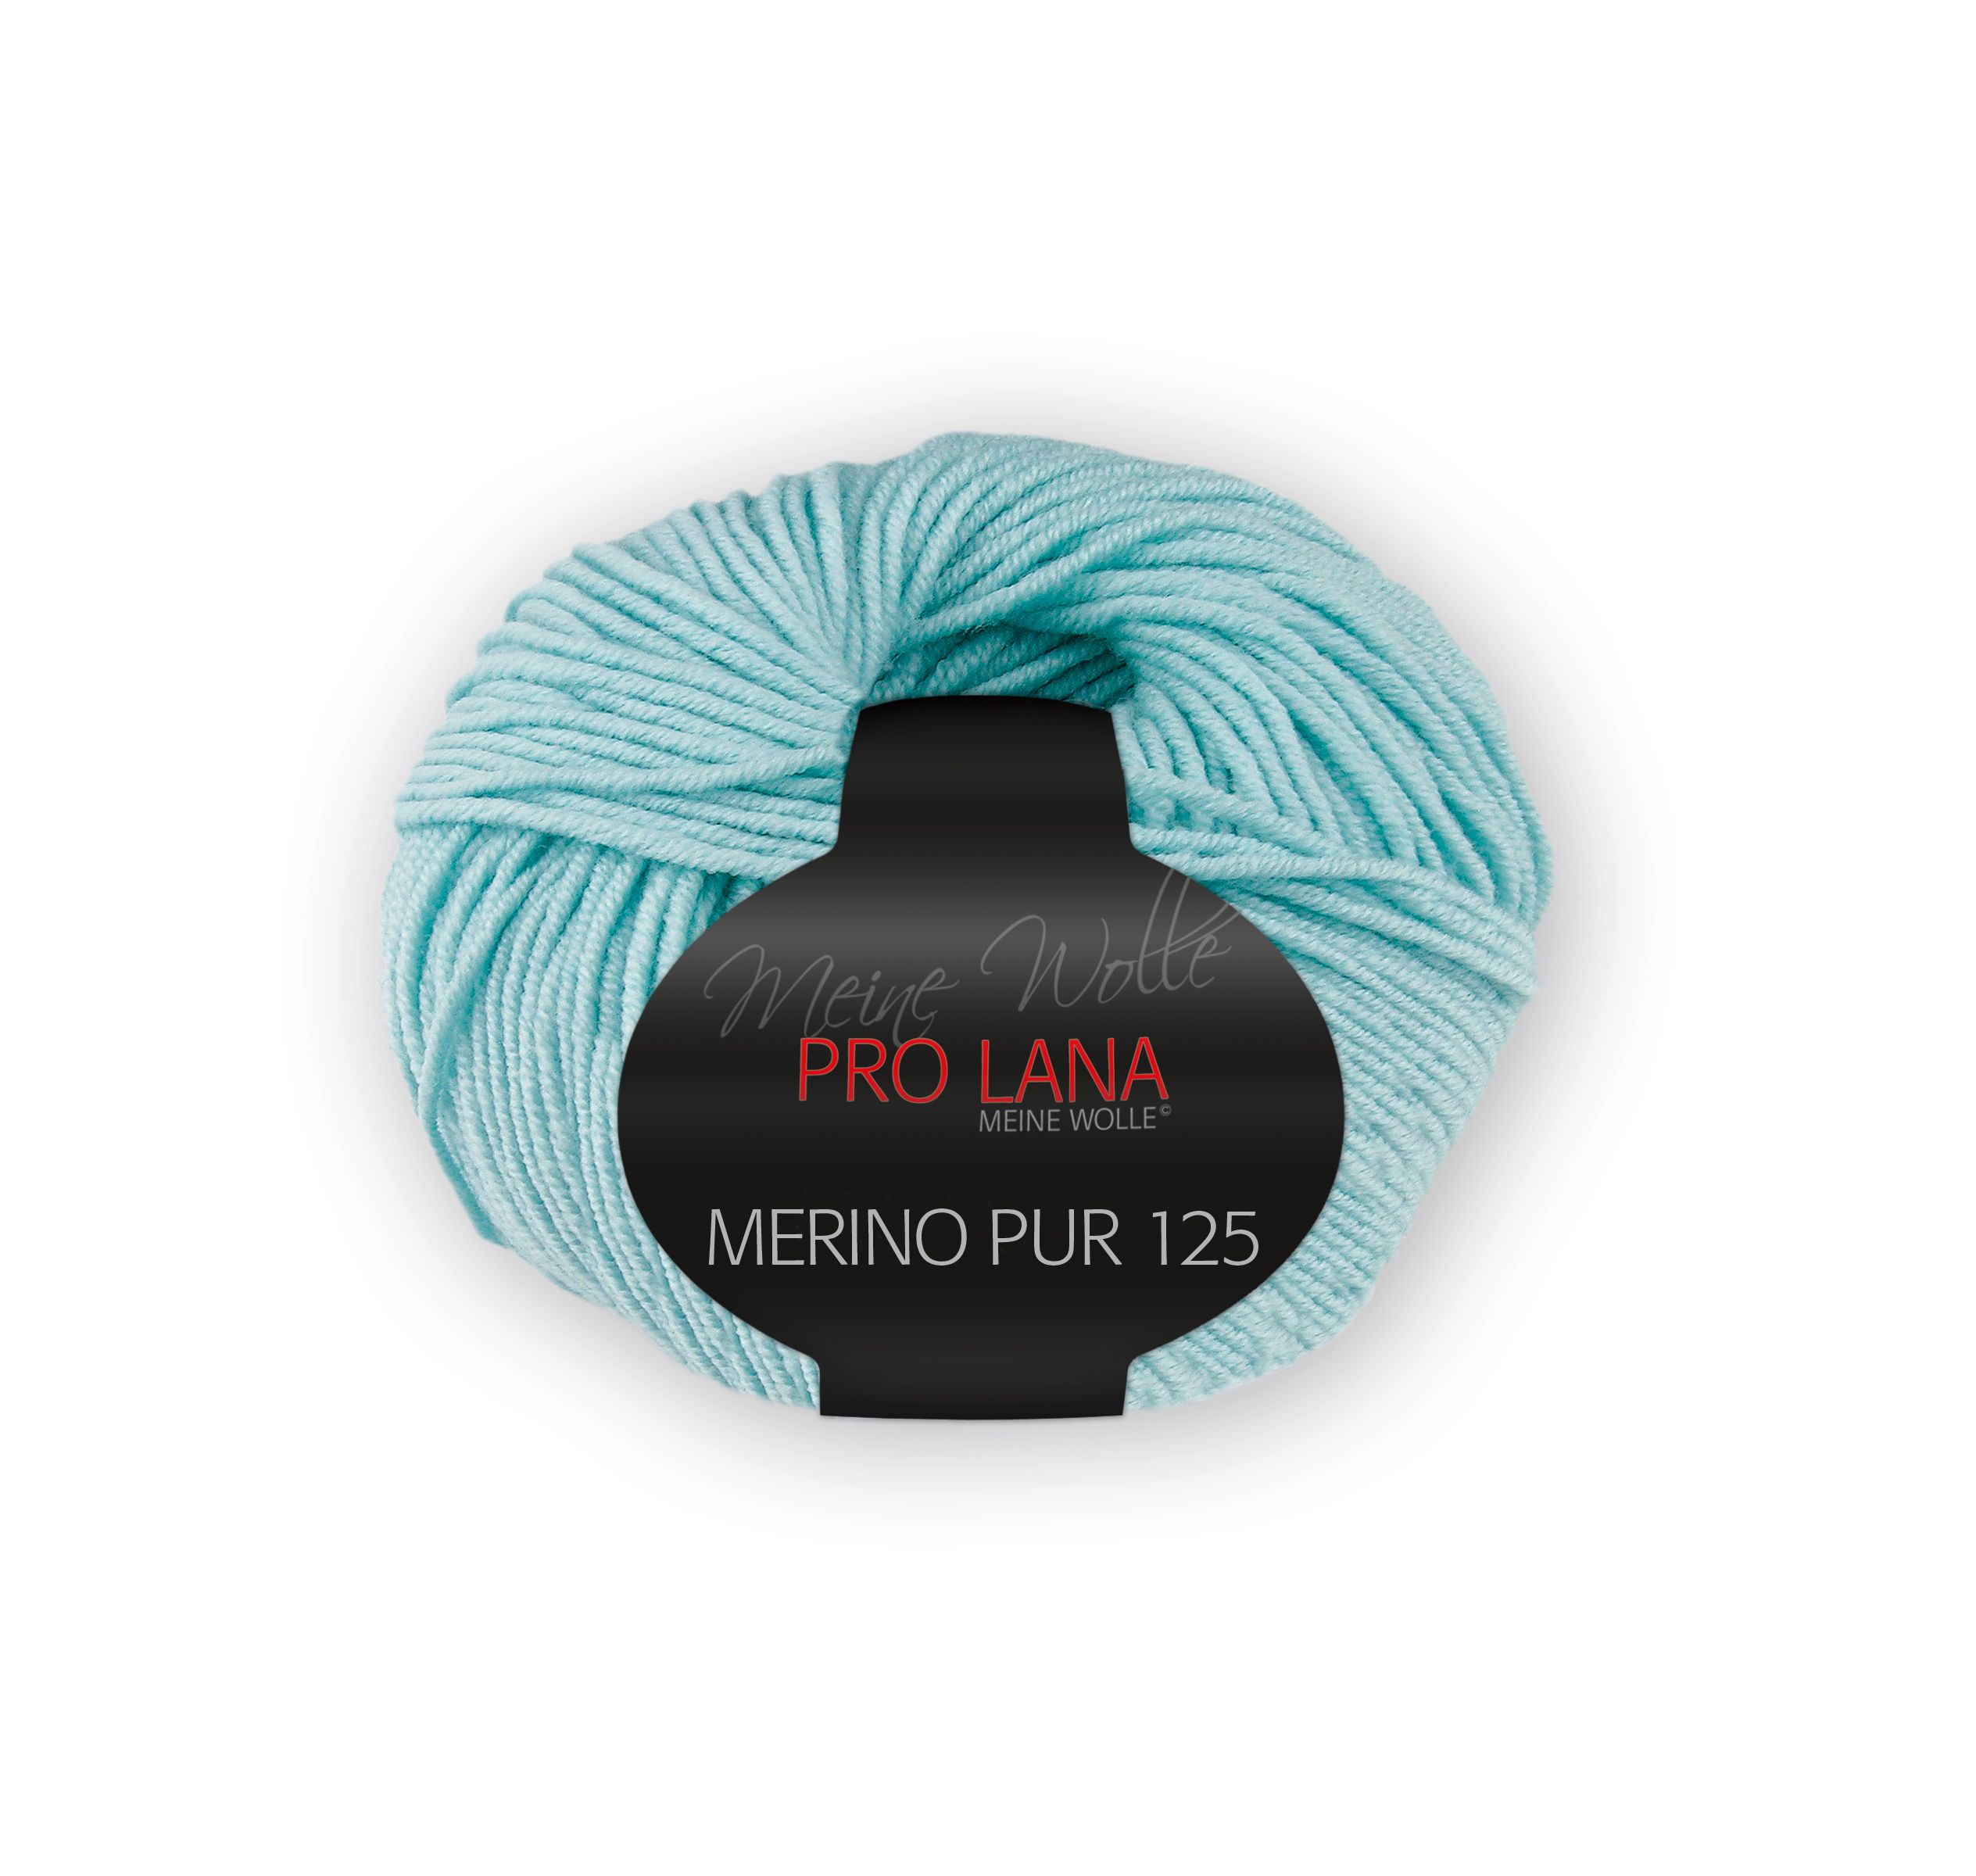 Pro Lana Merino Pur125 - Mint 61